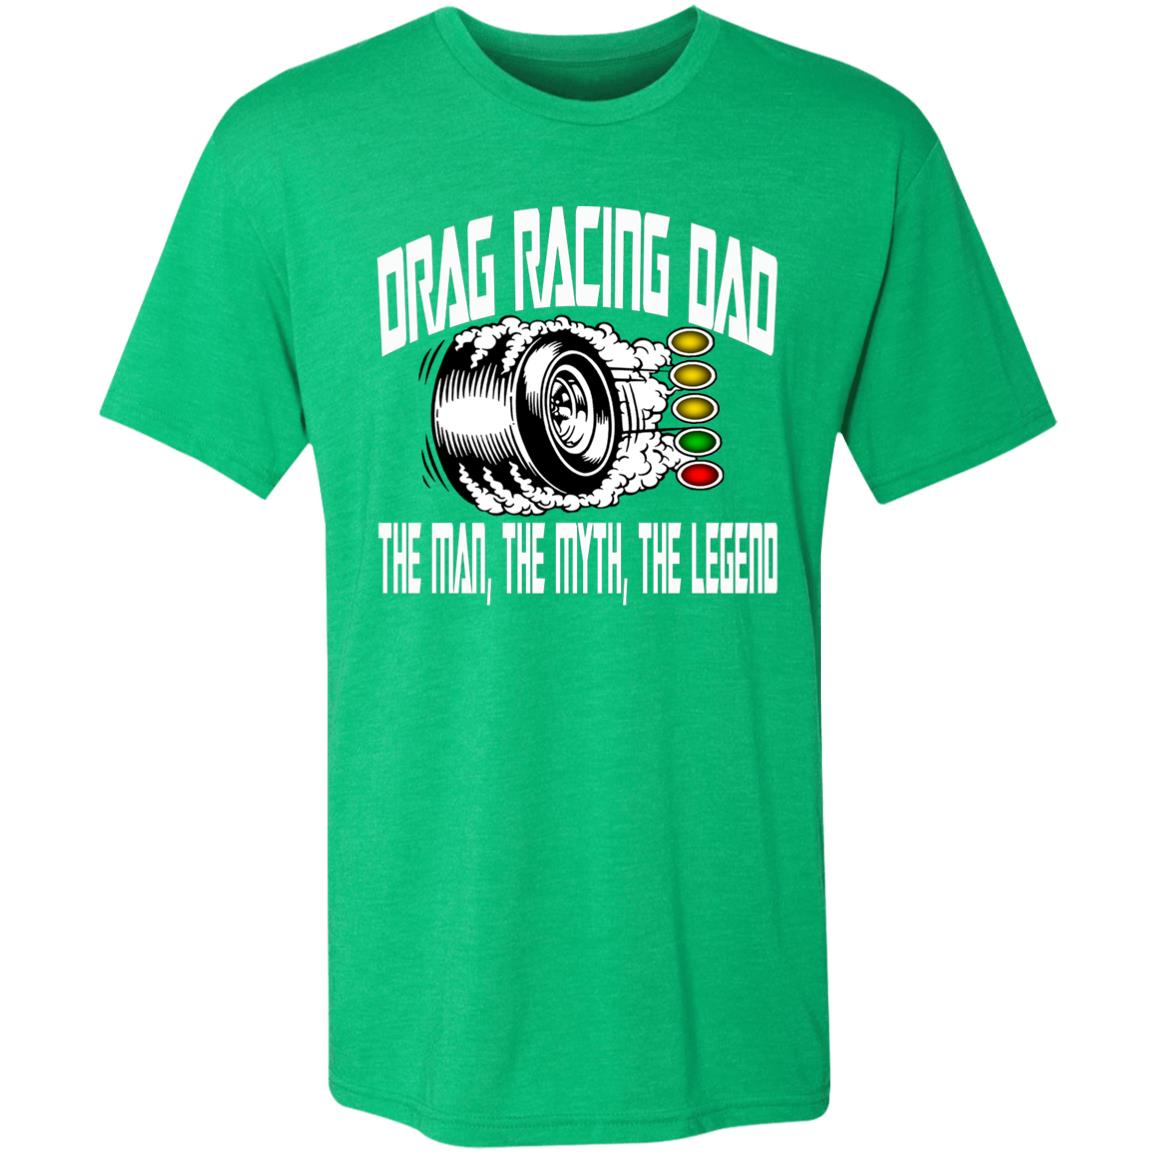 Drag Racing Dad Men's Triblend T-Shirt